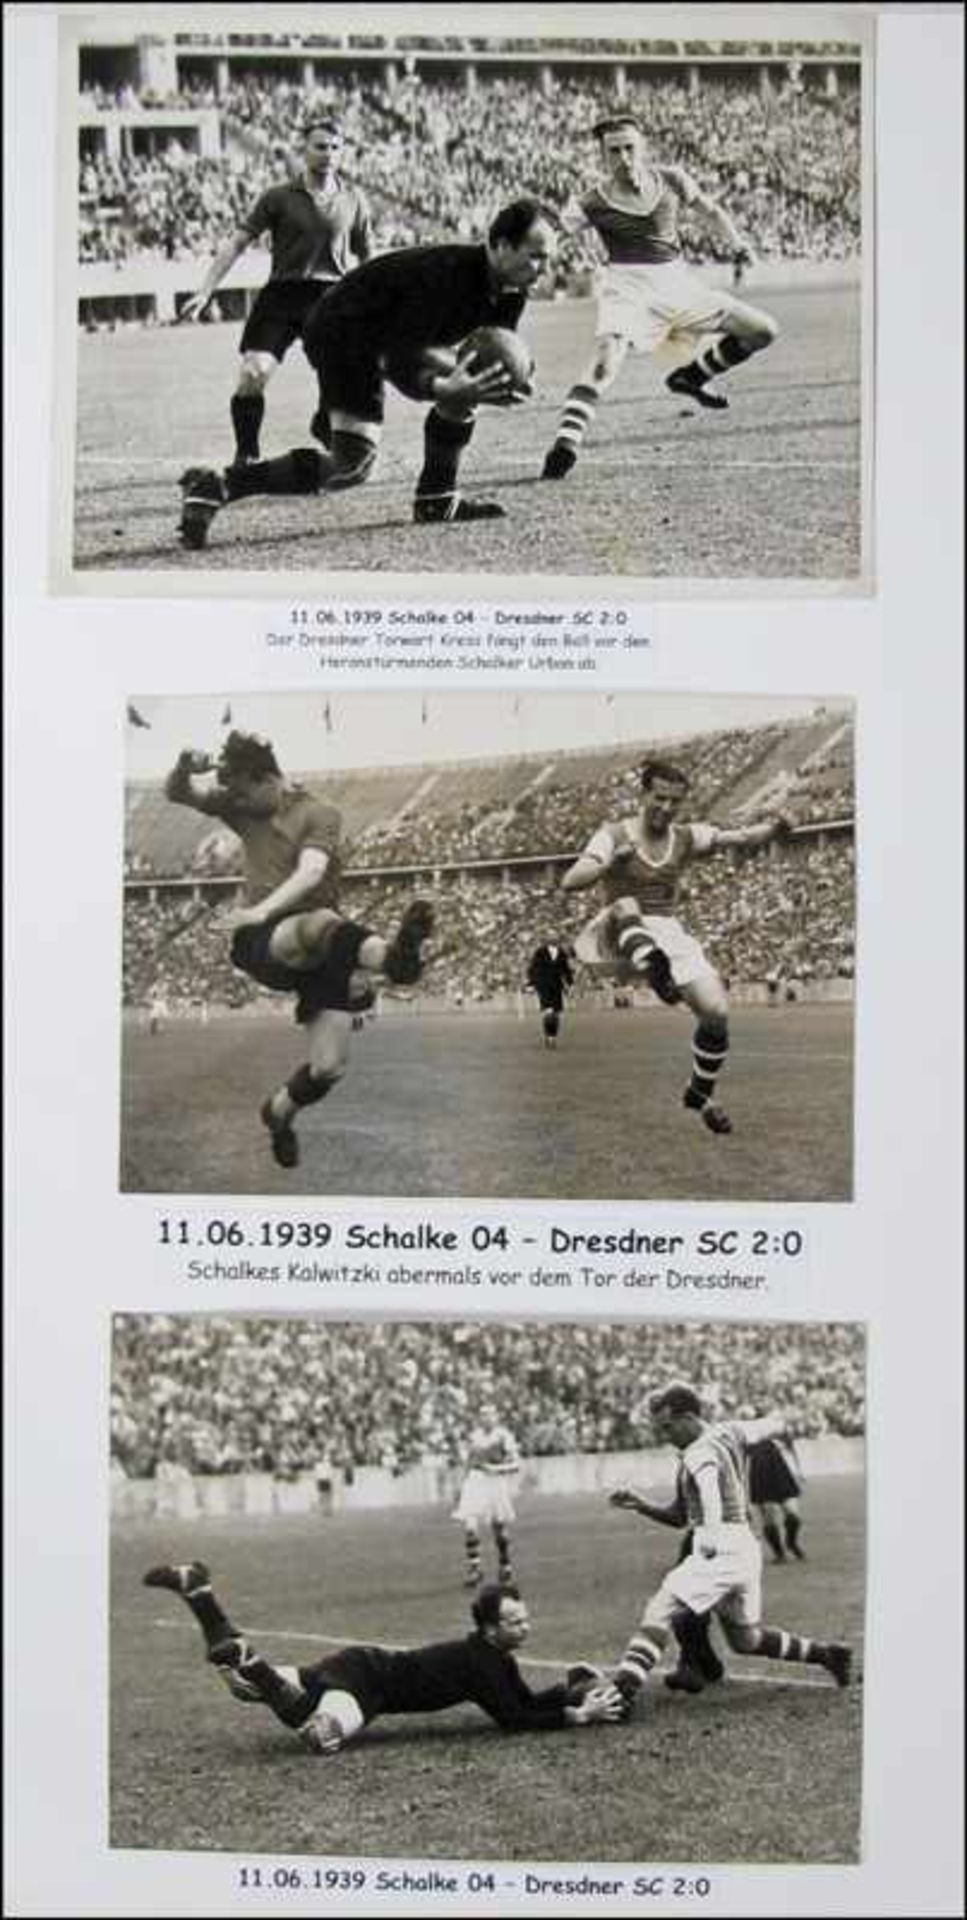 5 Pressfotos 1939 Schalke 04 German Football - Schalke - Foto 1939 - 5 s/w-Pressefotos vom